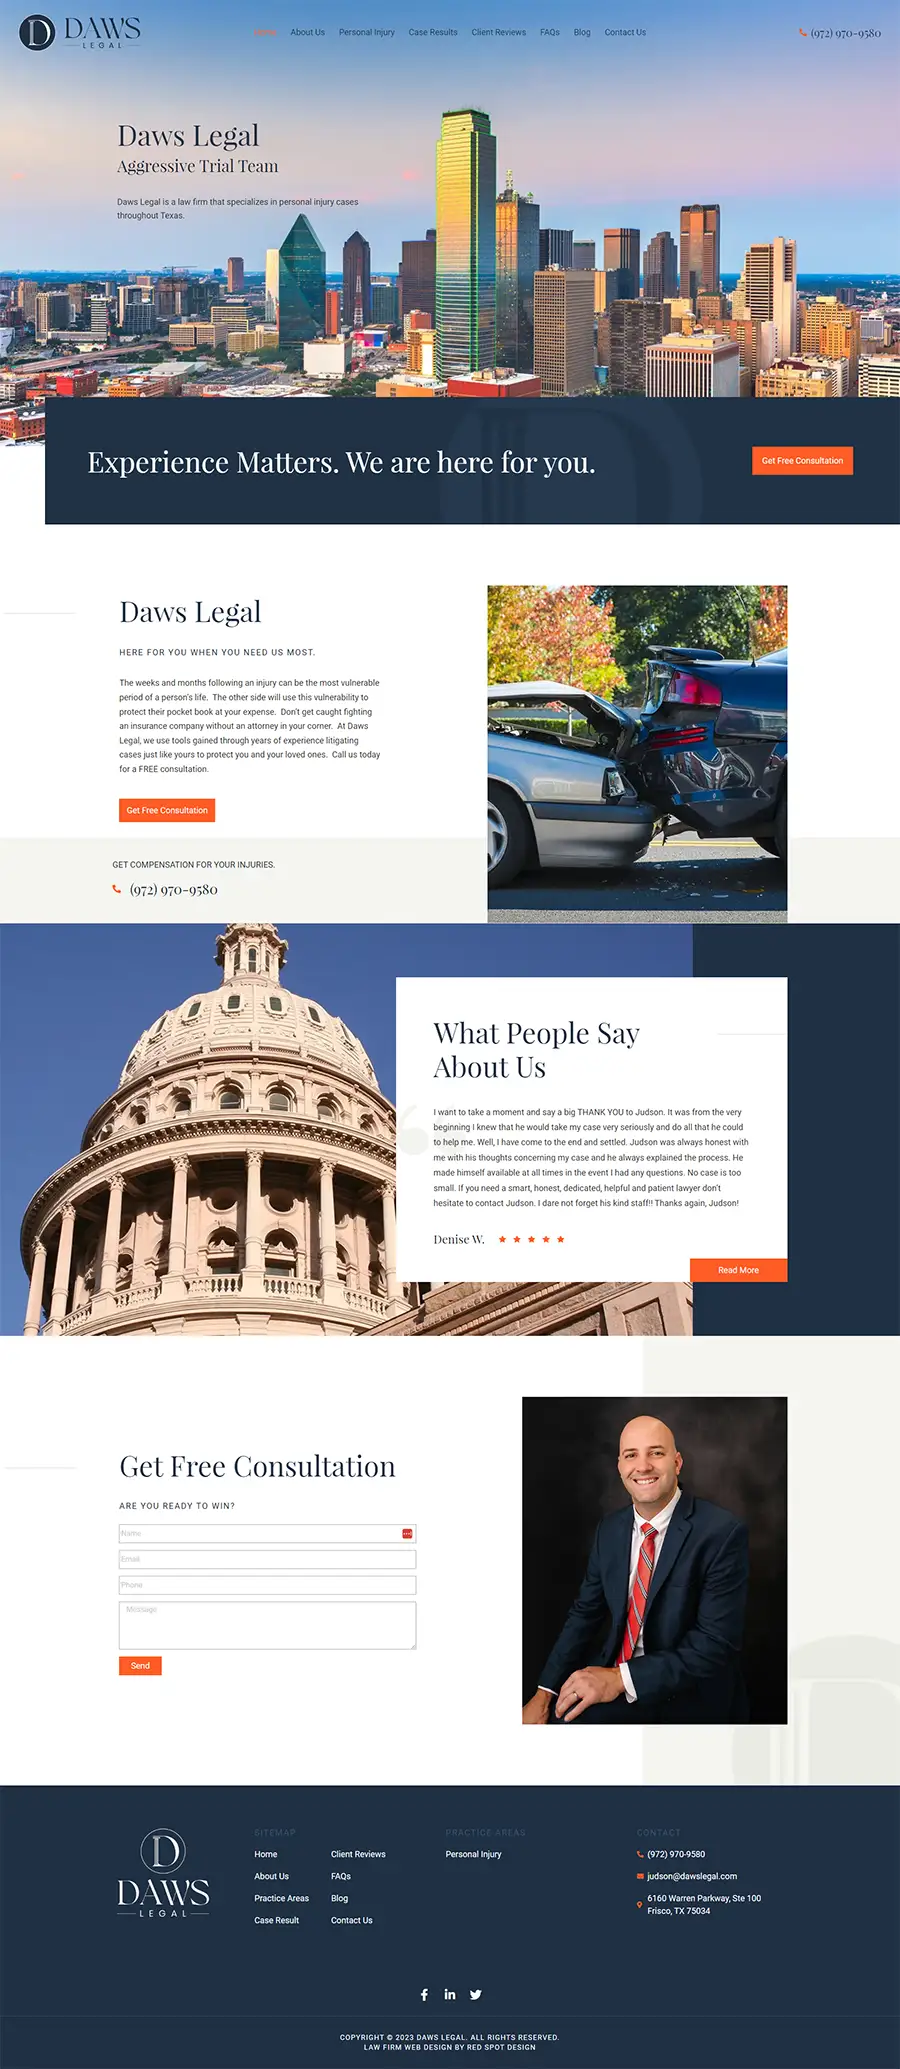 law firm web design for daws legal frisco texas